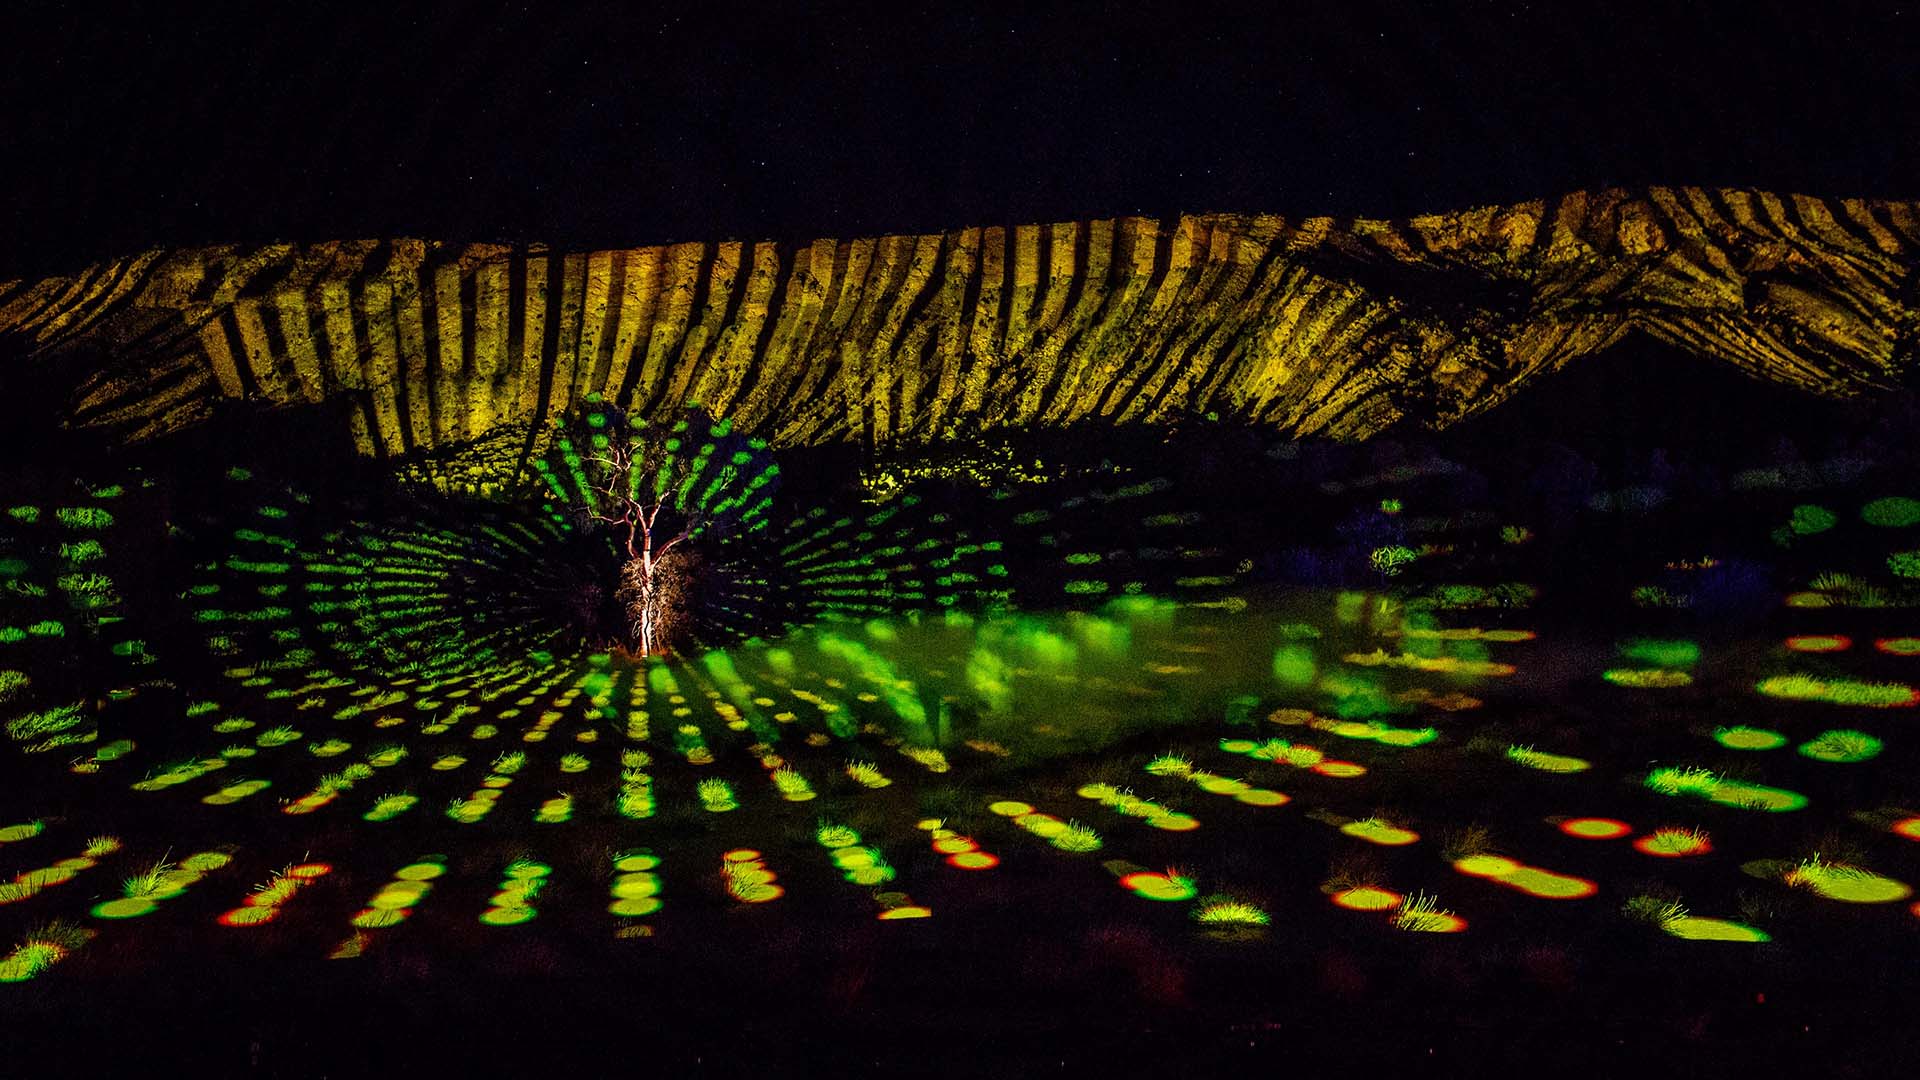 Alice Springs' Dazzling Parrtjima Festival Has Revealed Its Luminous 2020 Program